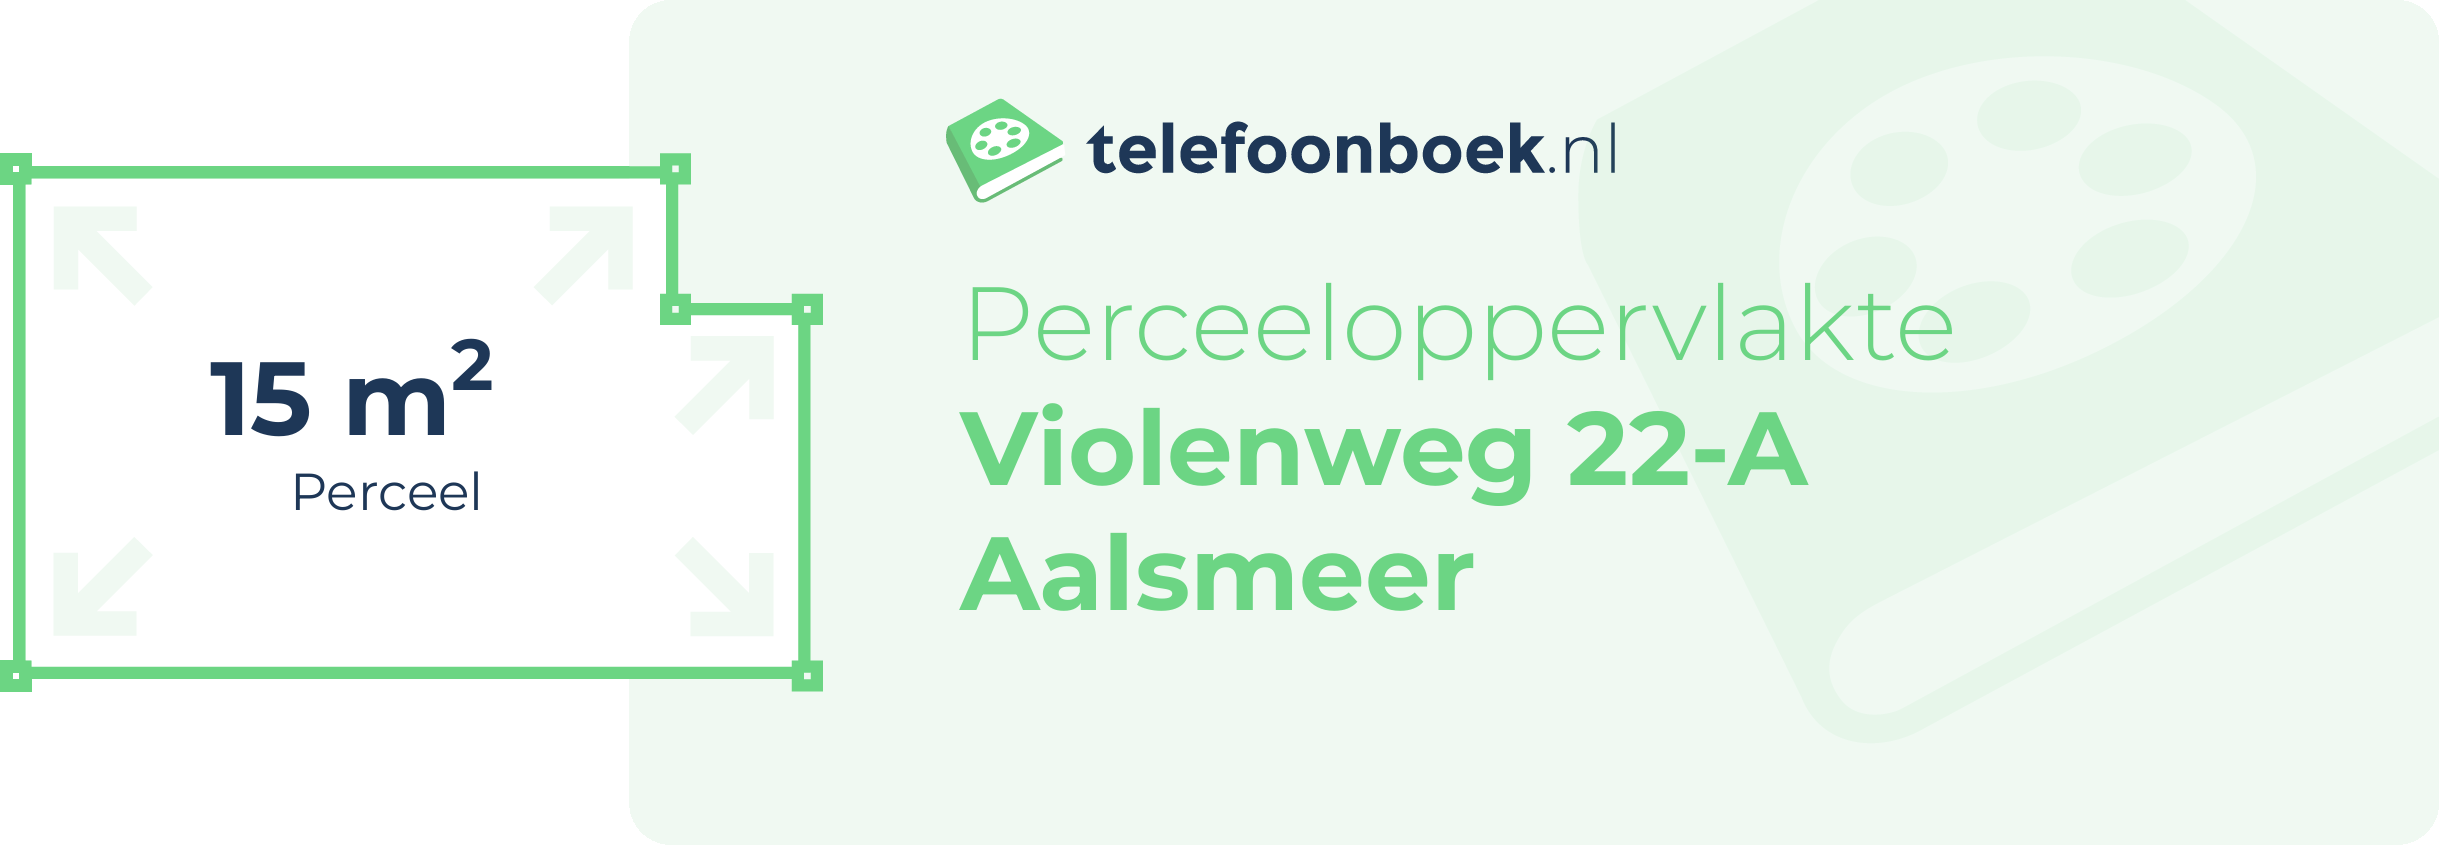 Perceeloppervlakte Violenweg 22-A Aalsmeer